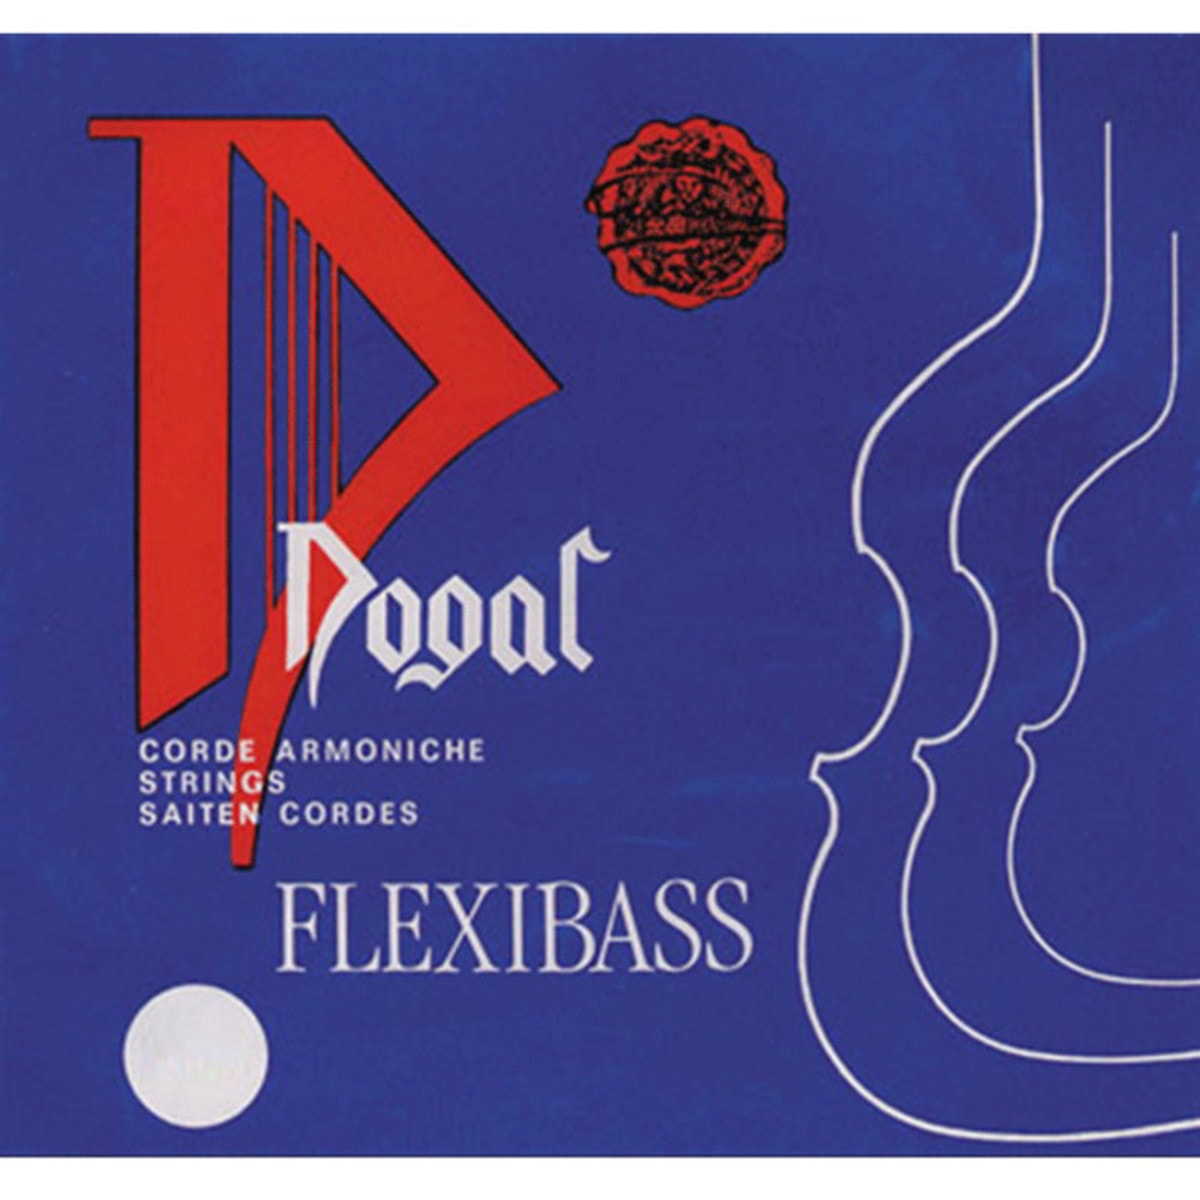 Dogal Flexibass Double Bass Single A String - 1/4 Size